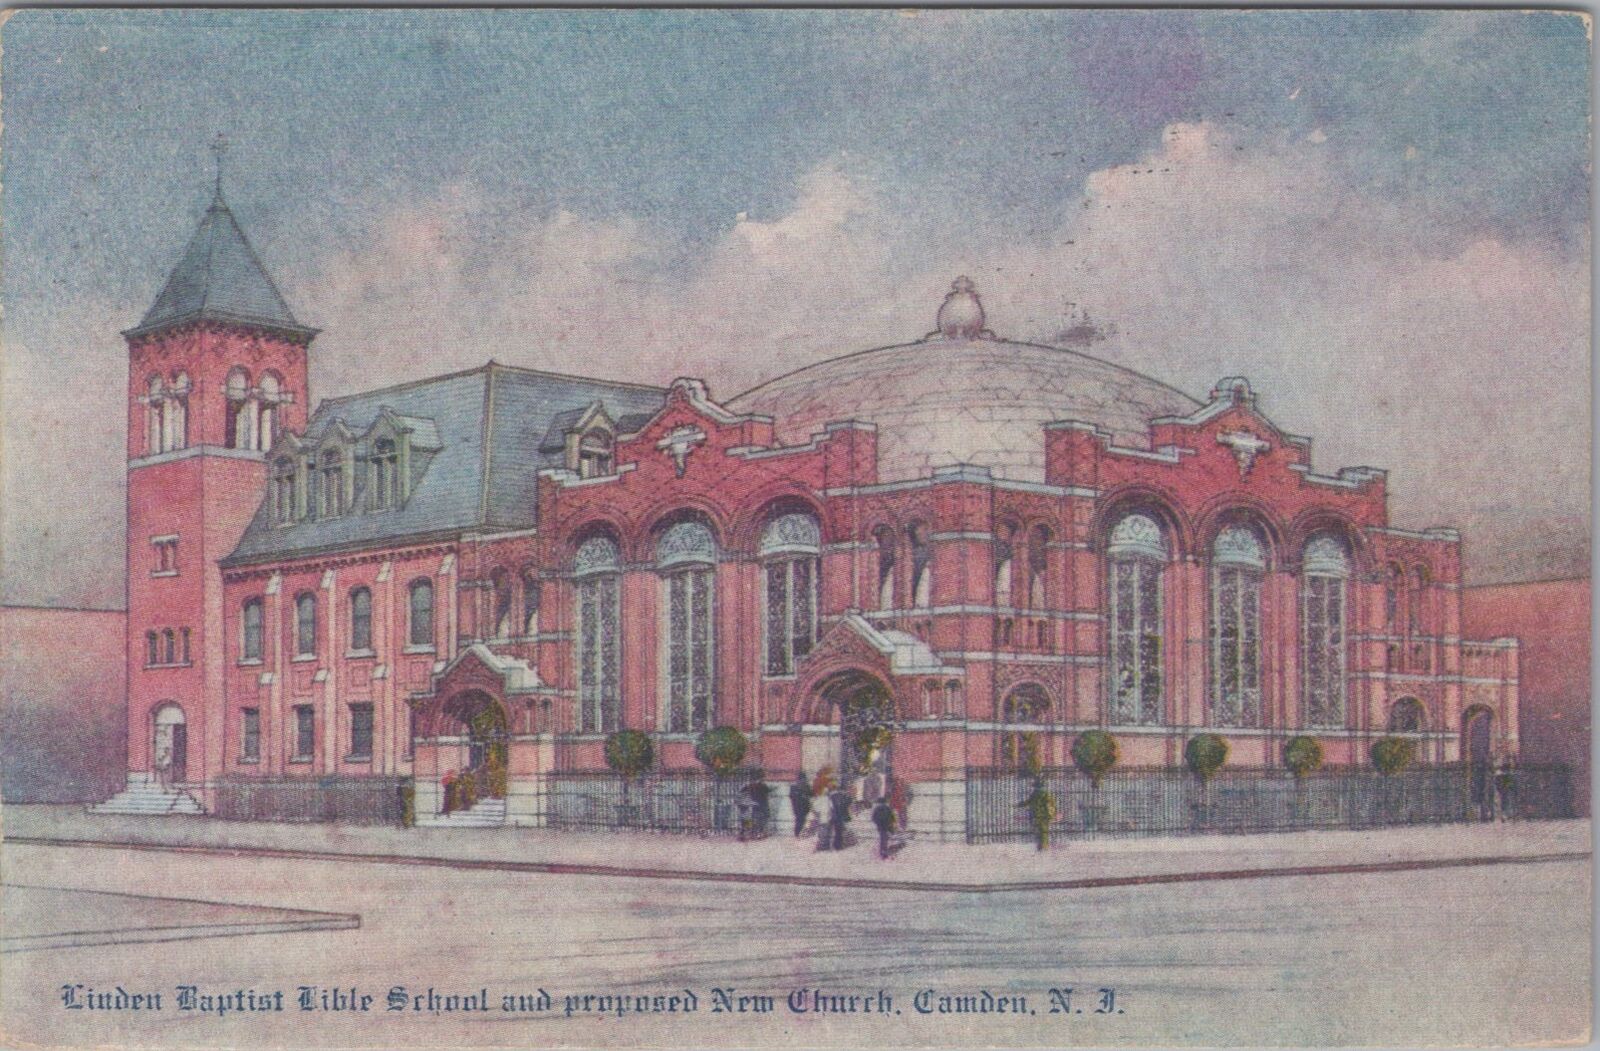 Camden Baptist Bible School Proposed New Church Camden New Jersey 1908 Postcard